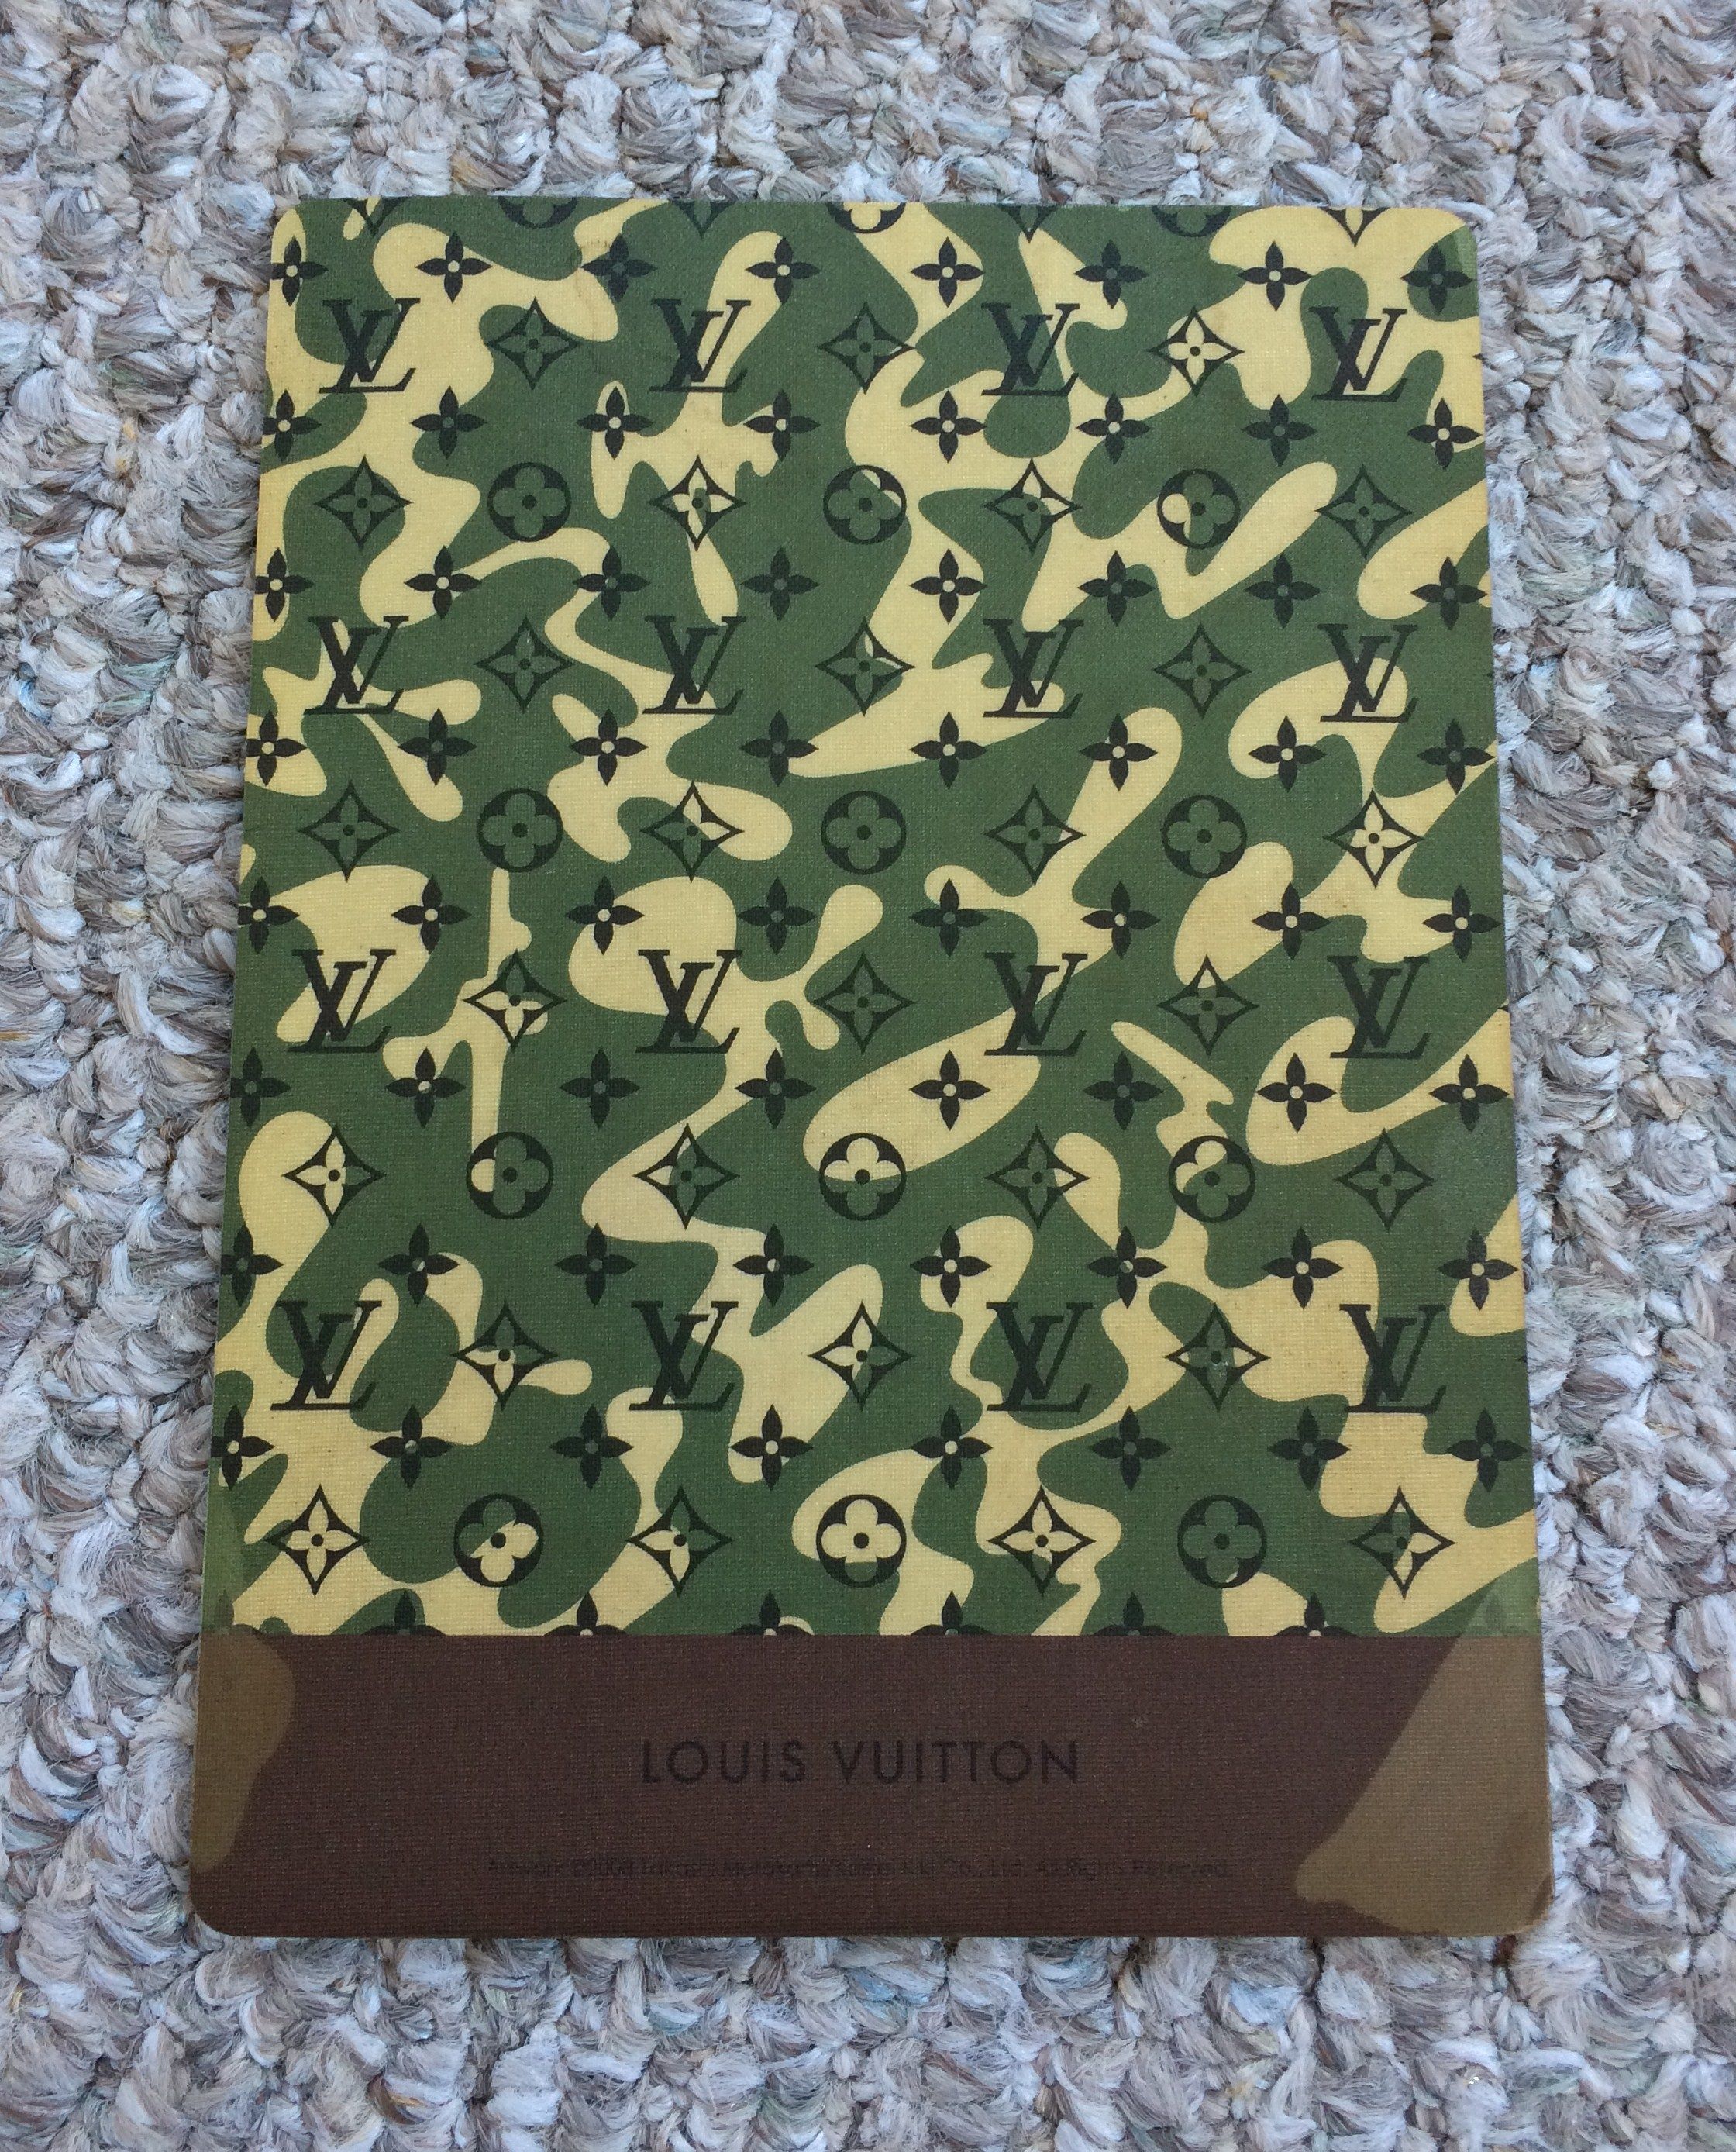 Louis Vuitton 2008 Murakami x Louis Vuitton Monogramouflage